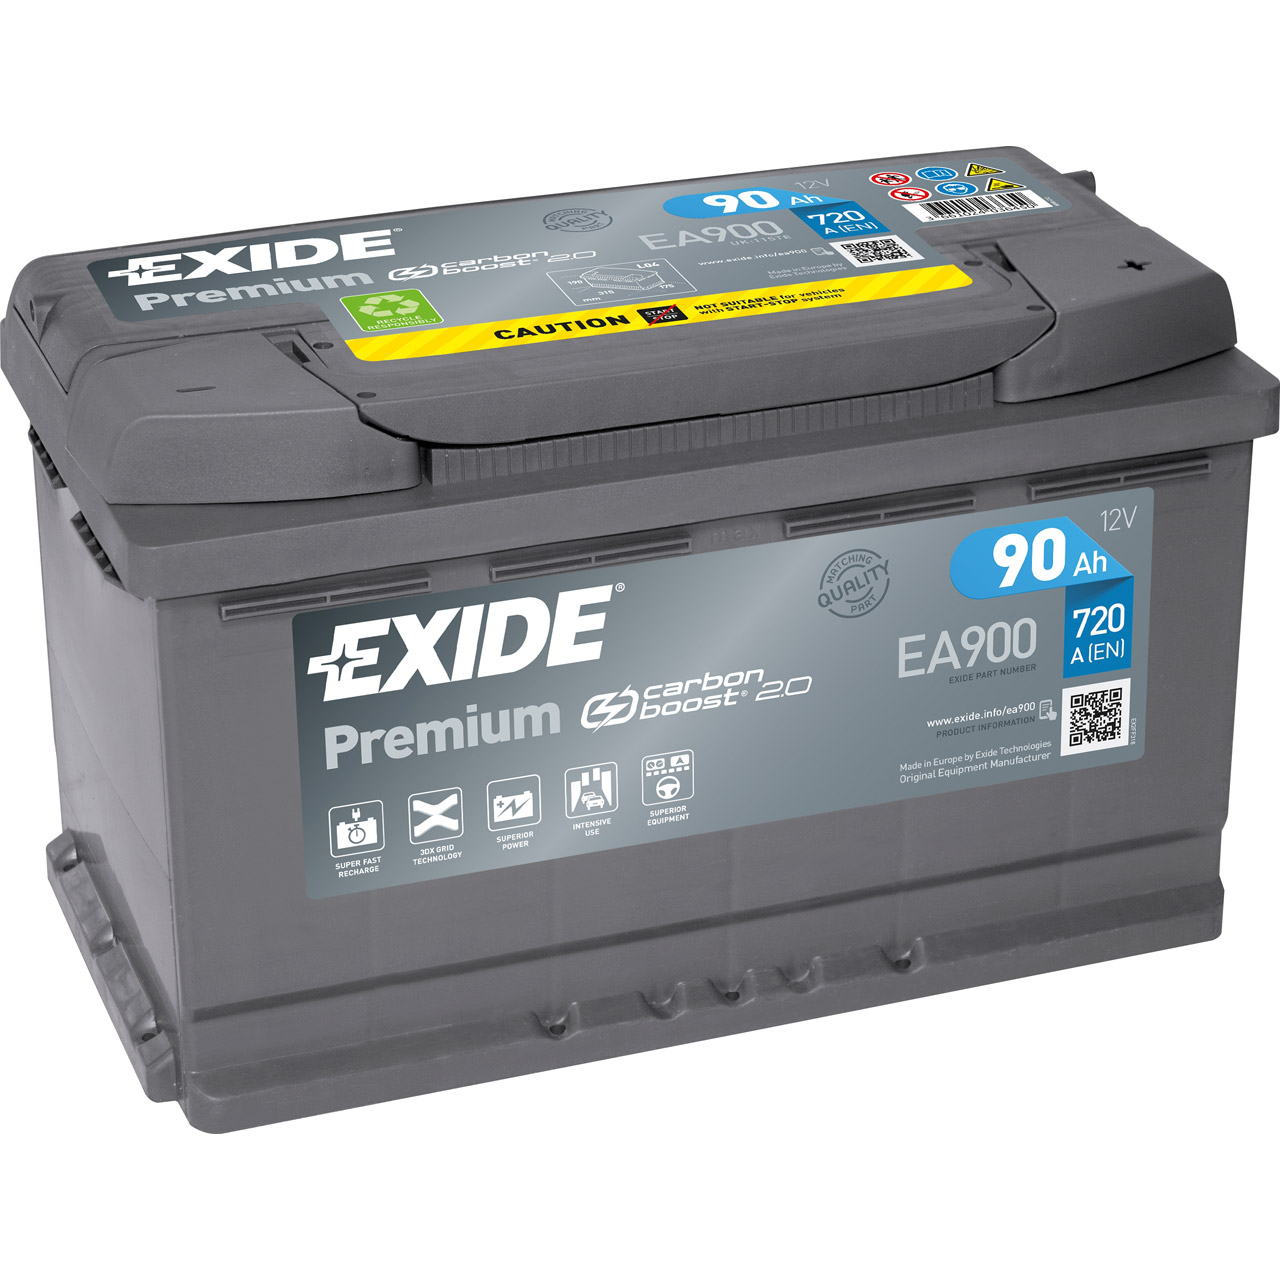 EXIDE EA900 PREMIUM Autobatterie Batterie Starterbatterie 12V 90Ah